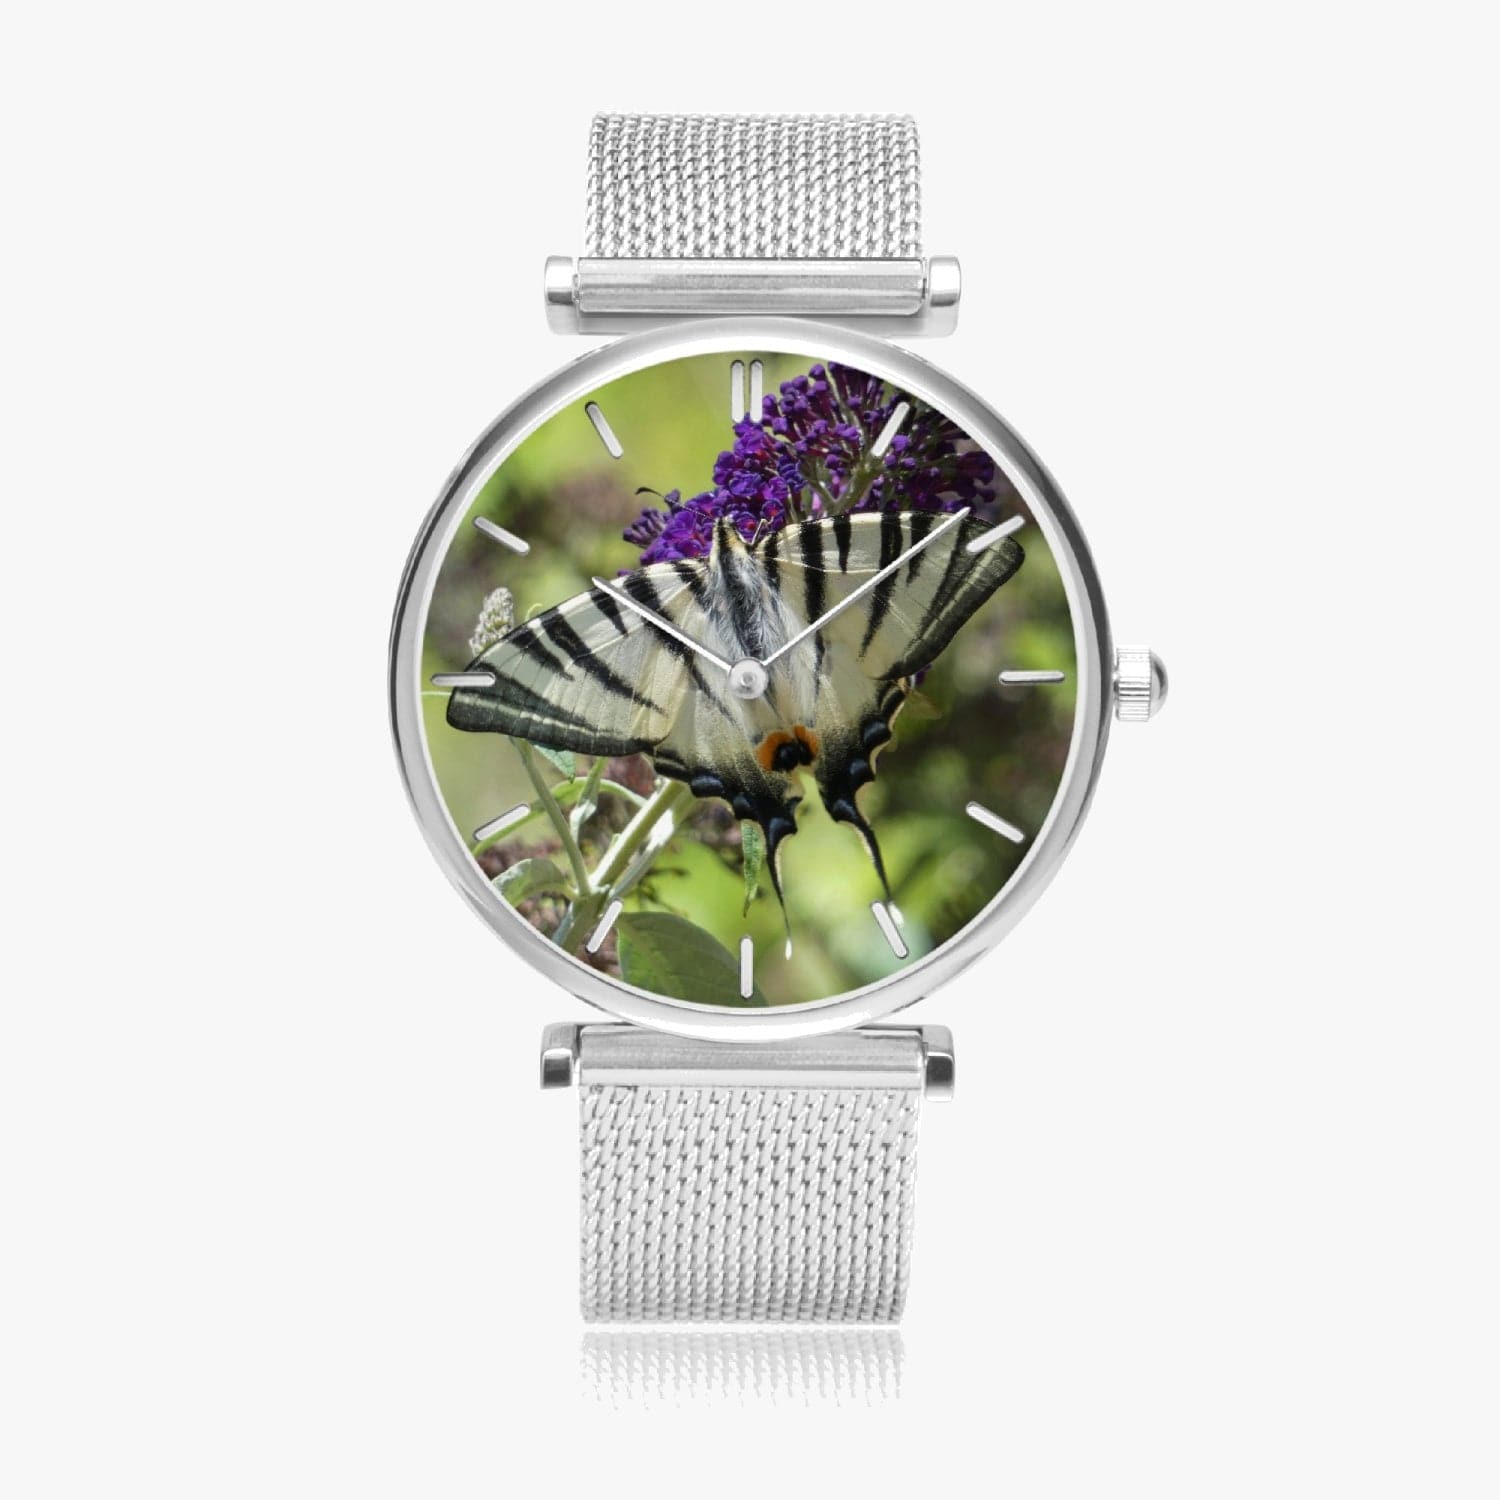 Butterfly II, New Stylish Ultra-Thin Quartz Watch. Designer watch by Sensus Studio design